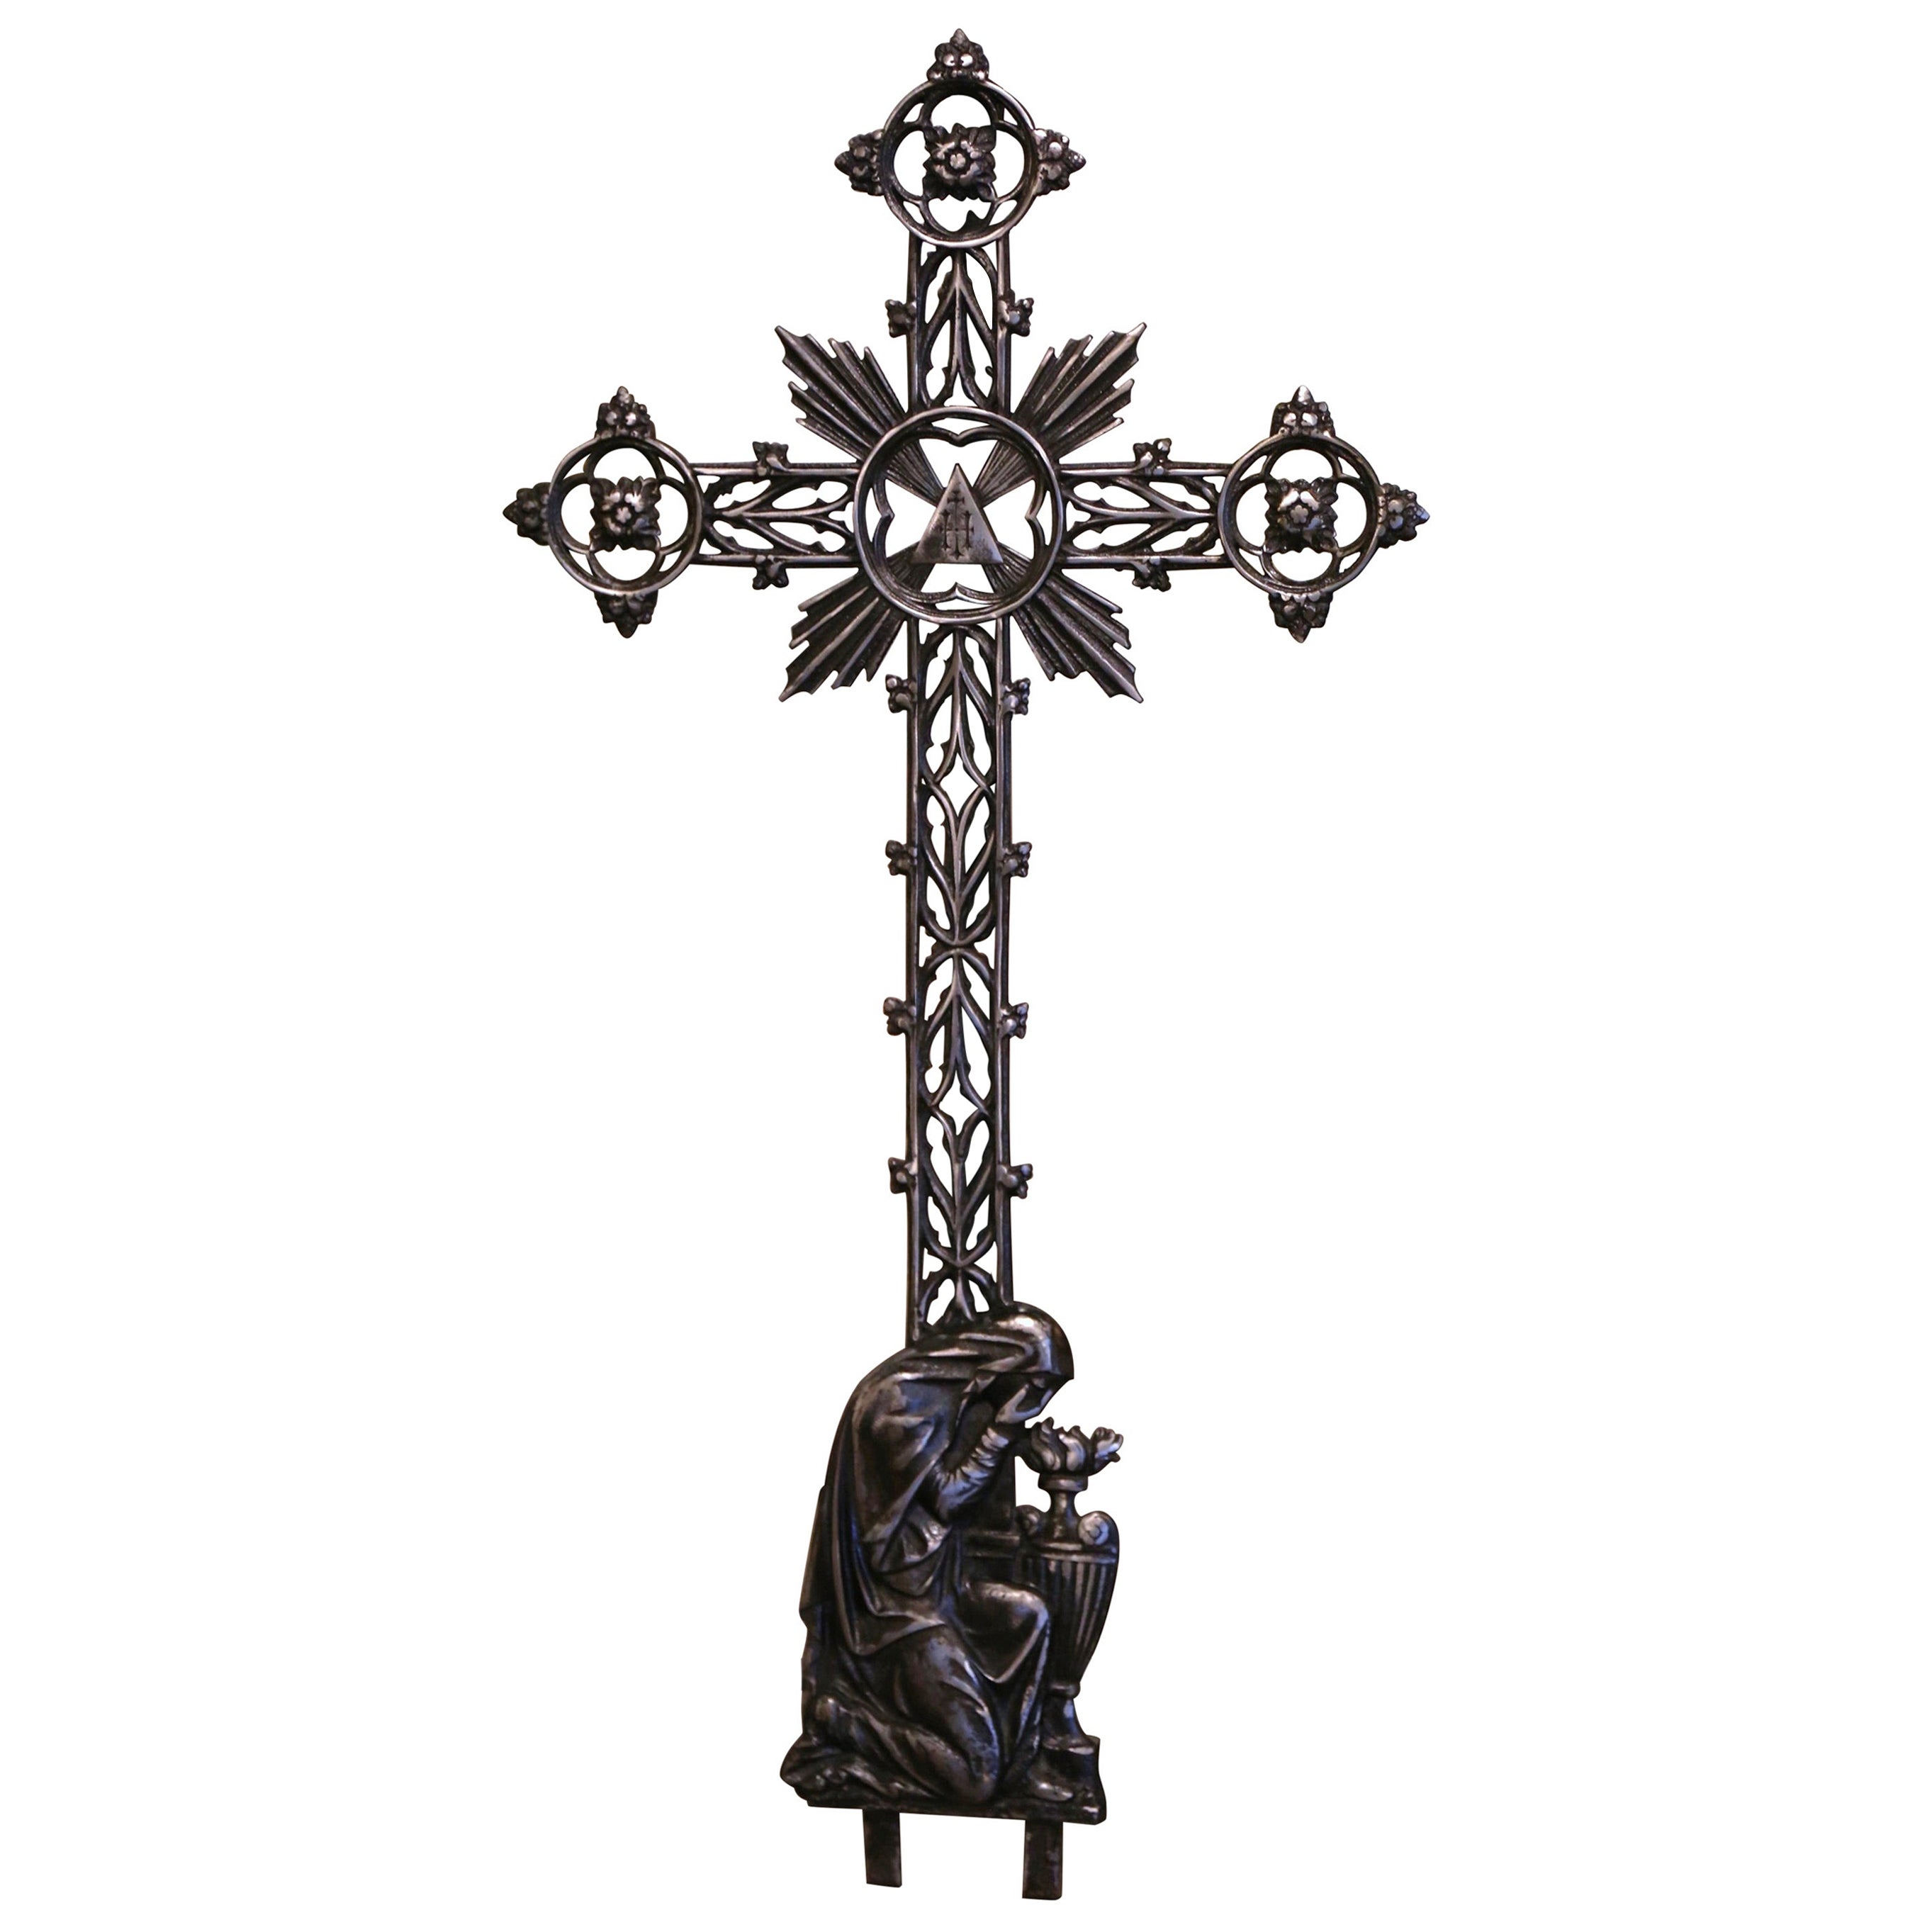 19th Century, French Polished Iron Catholic Cross with Virgin Mary Mourning